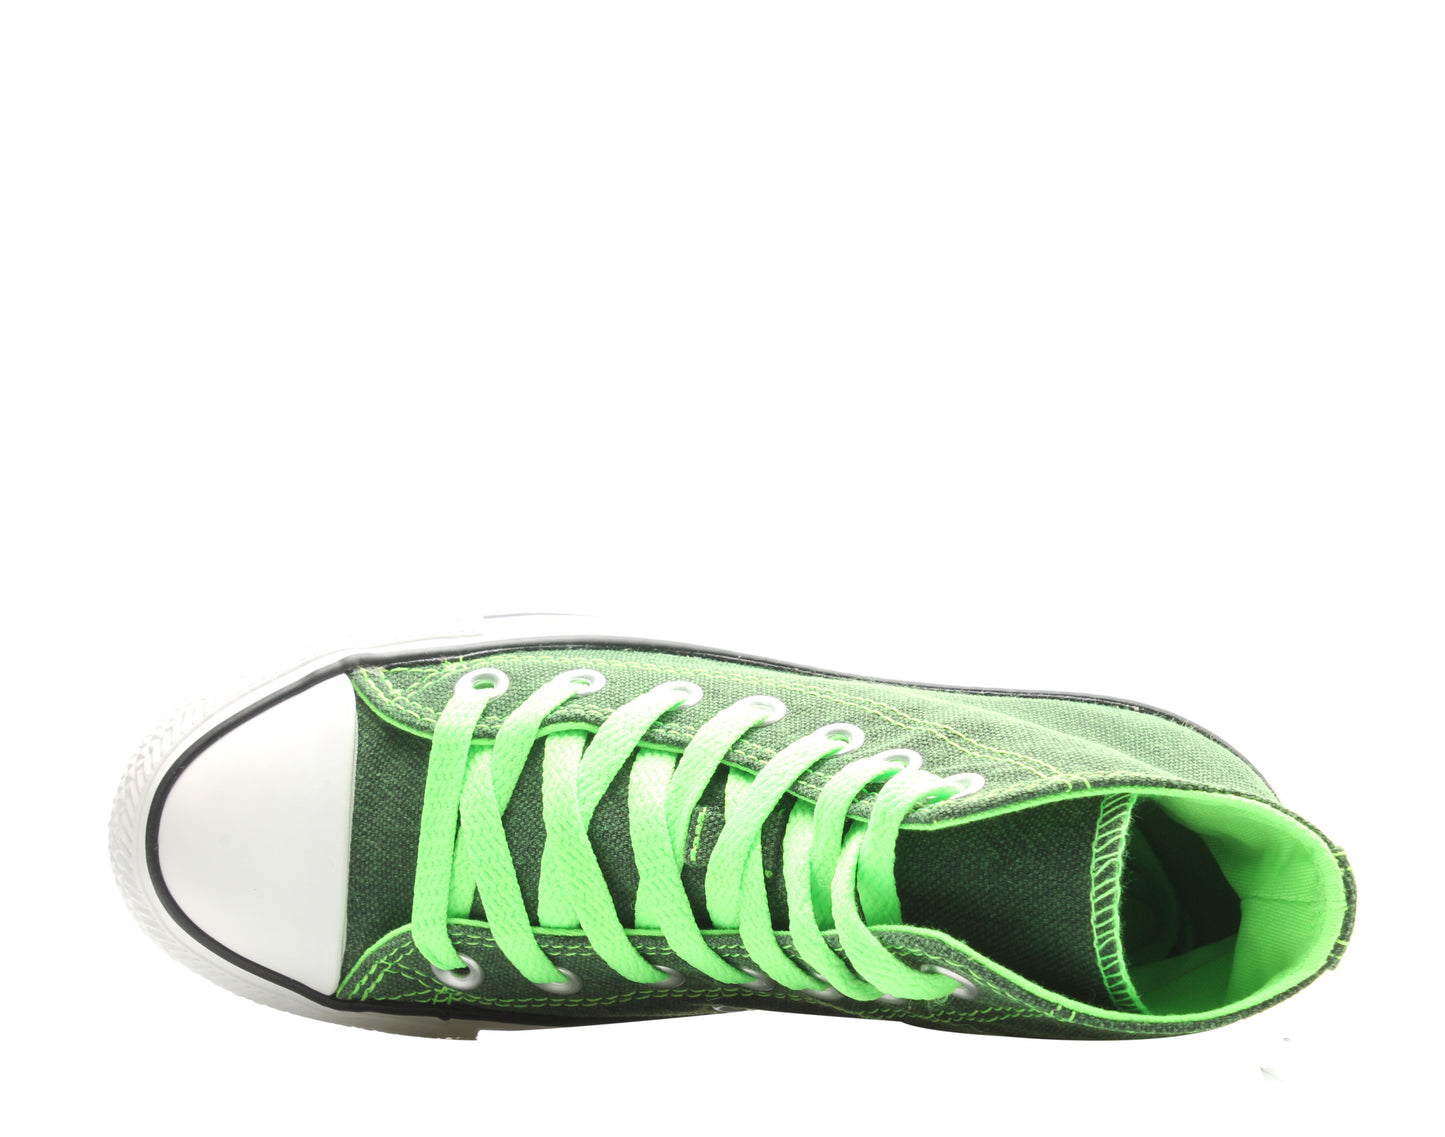 Converse Chuck Taylor All Star Green Gecko High Top Women's Sneakers 540250C